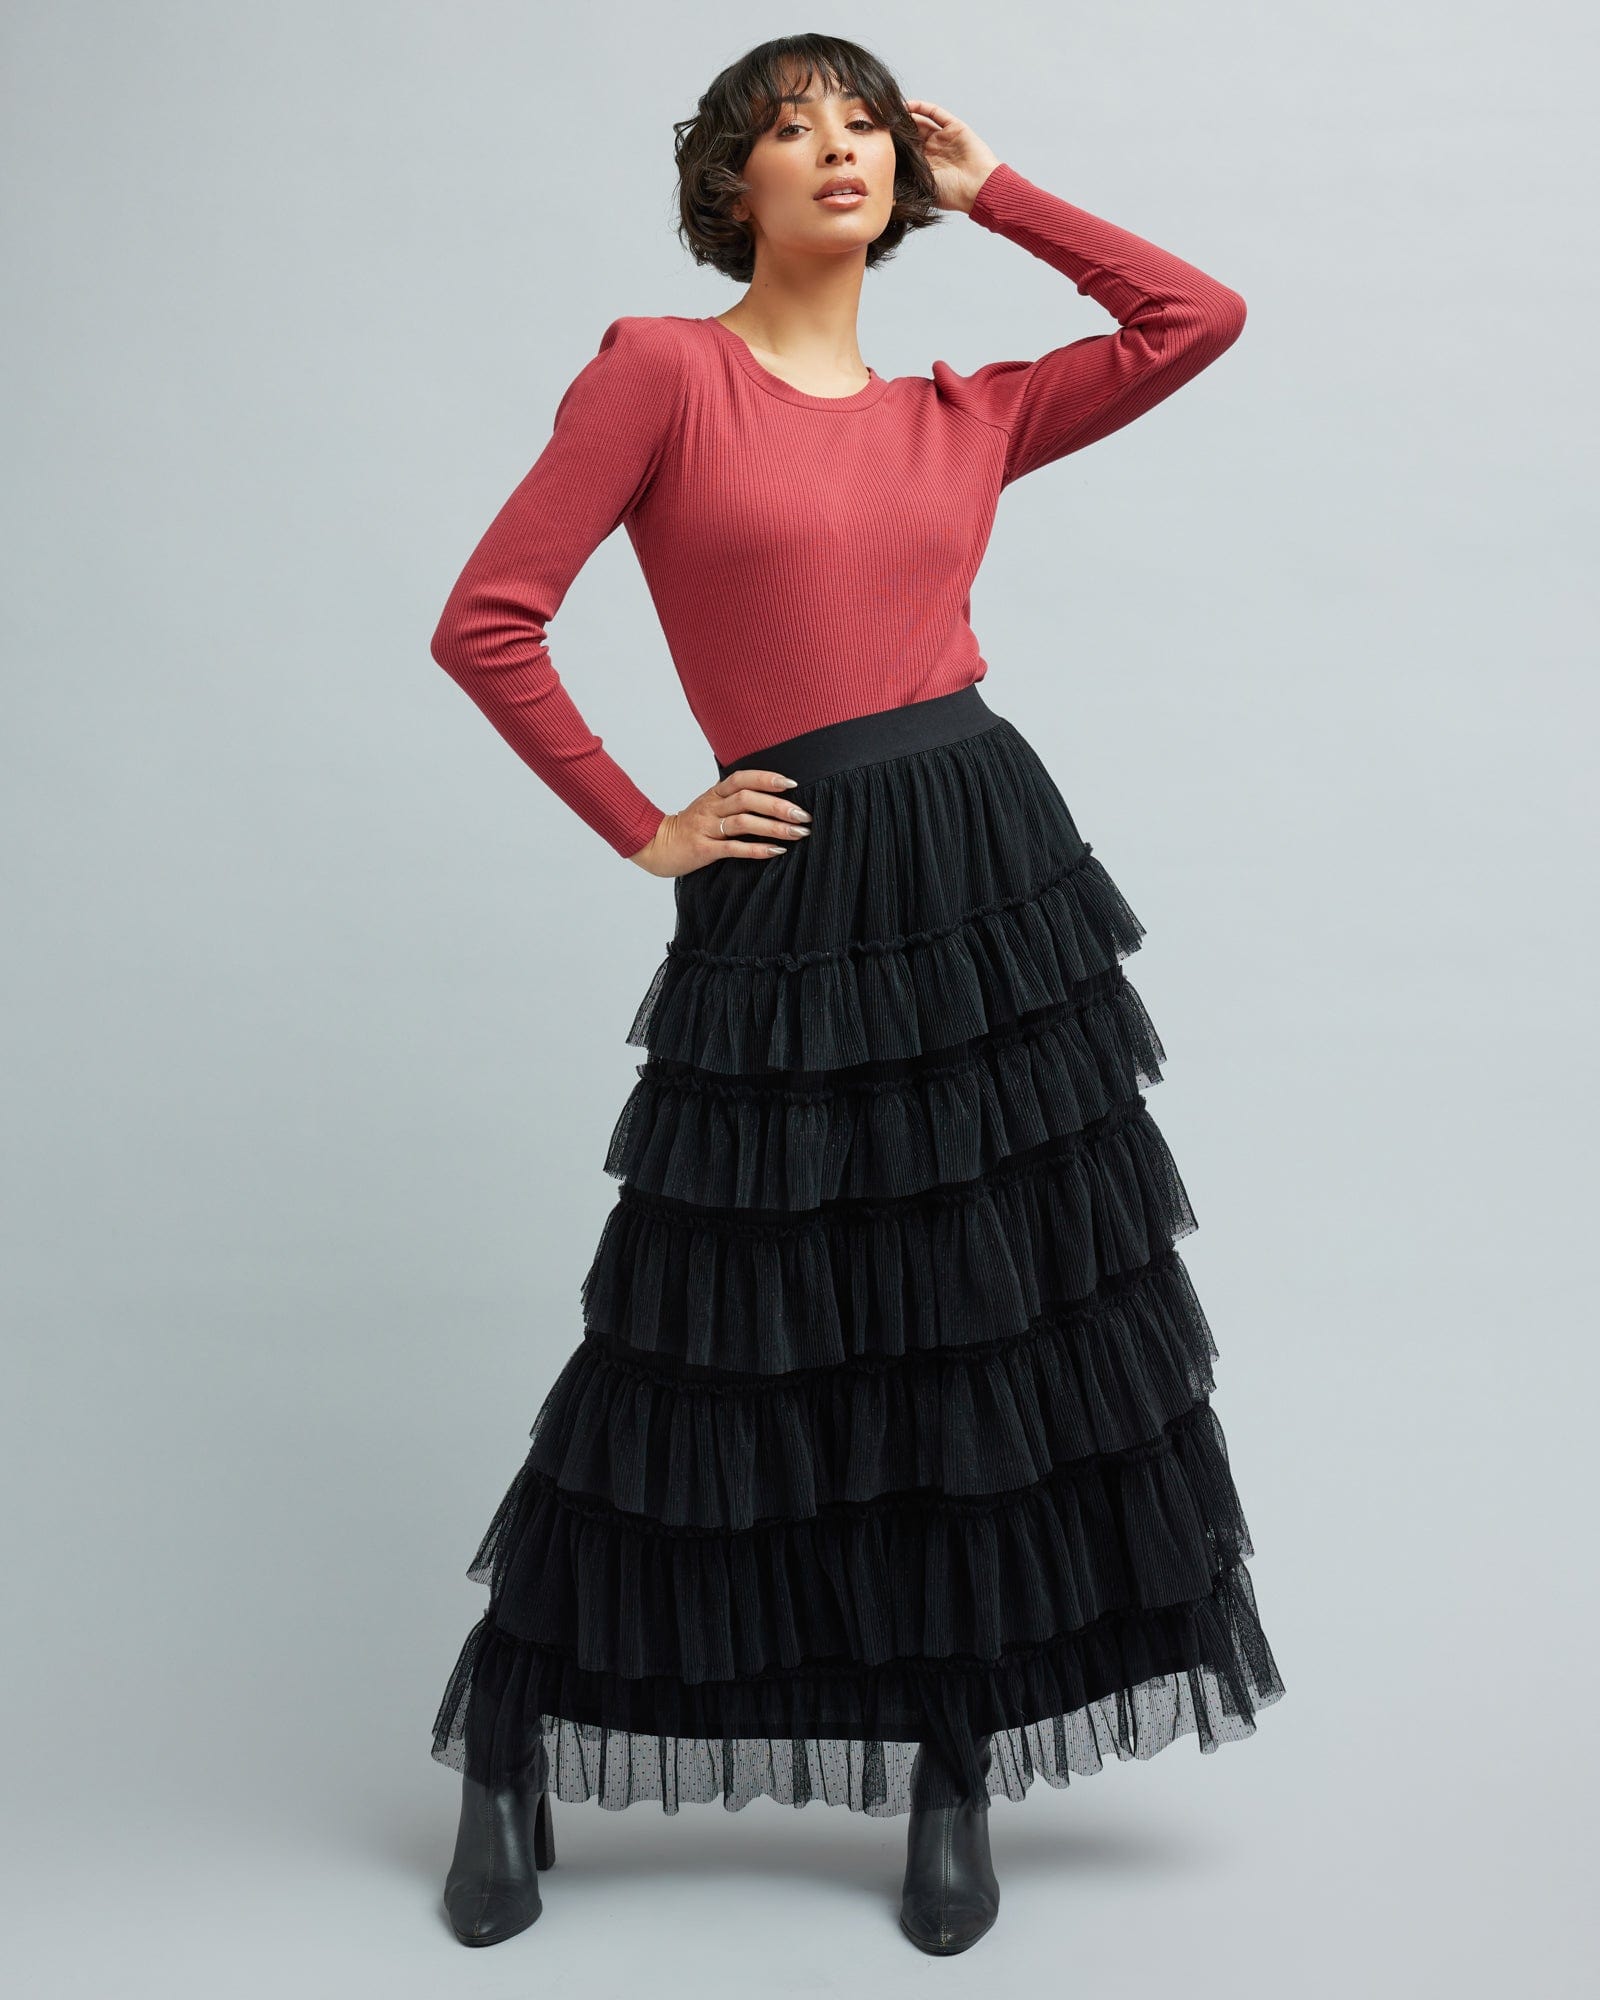 Woman in a black, max-length, ruffled skirt